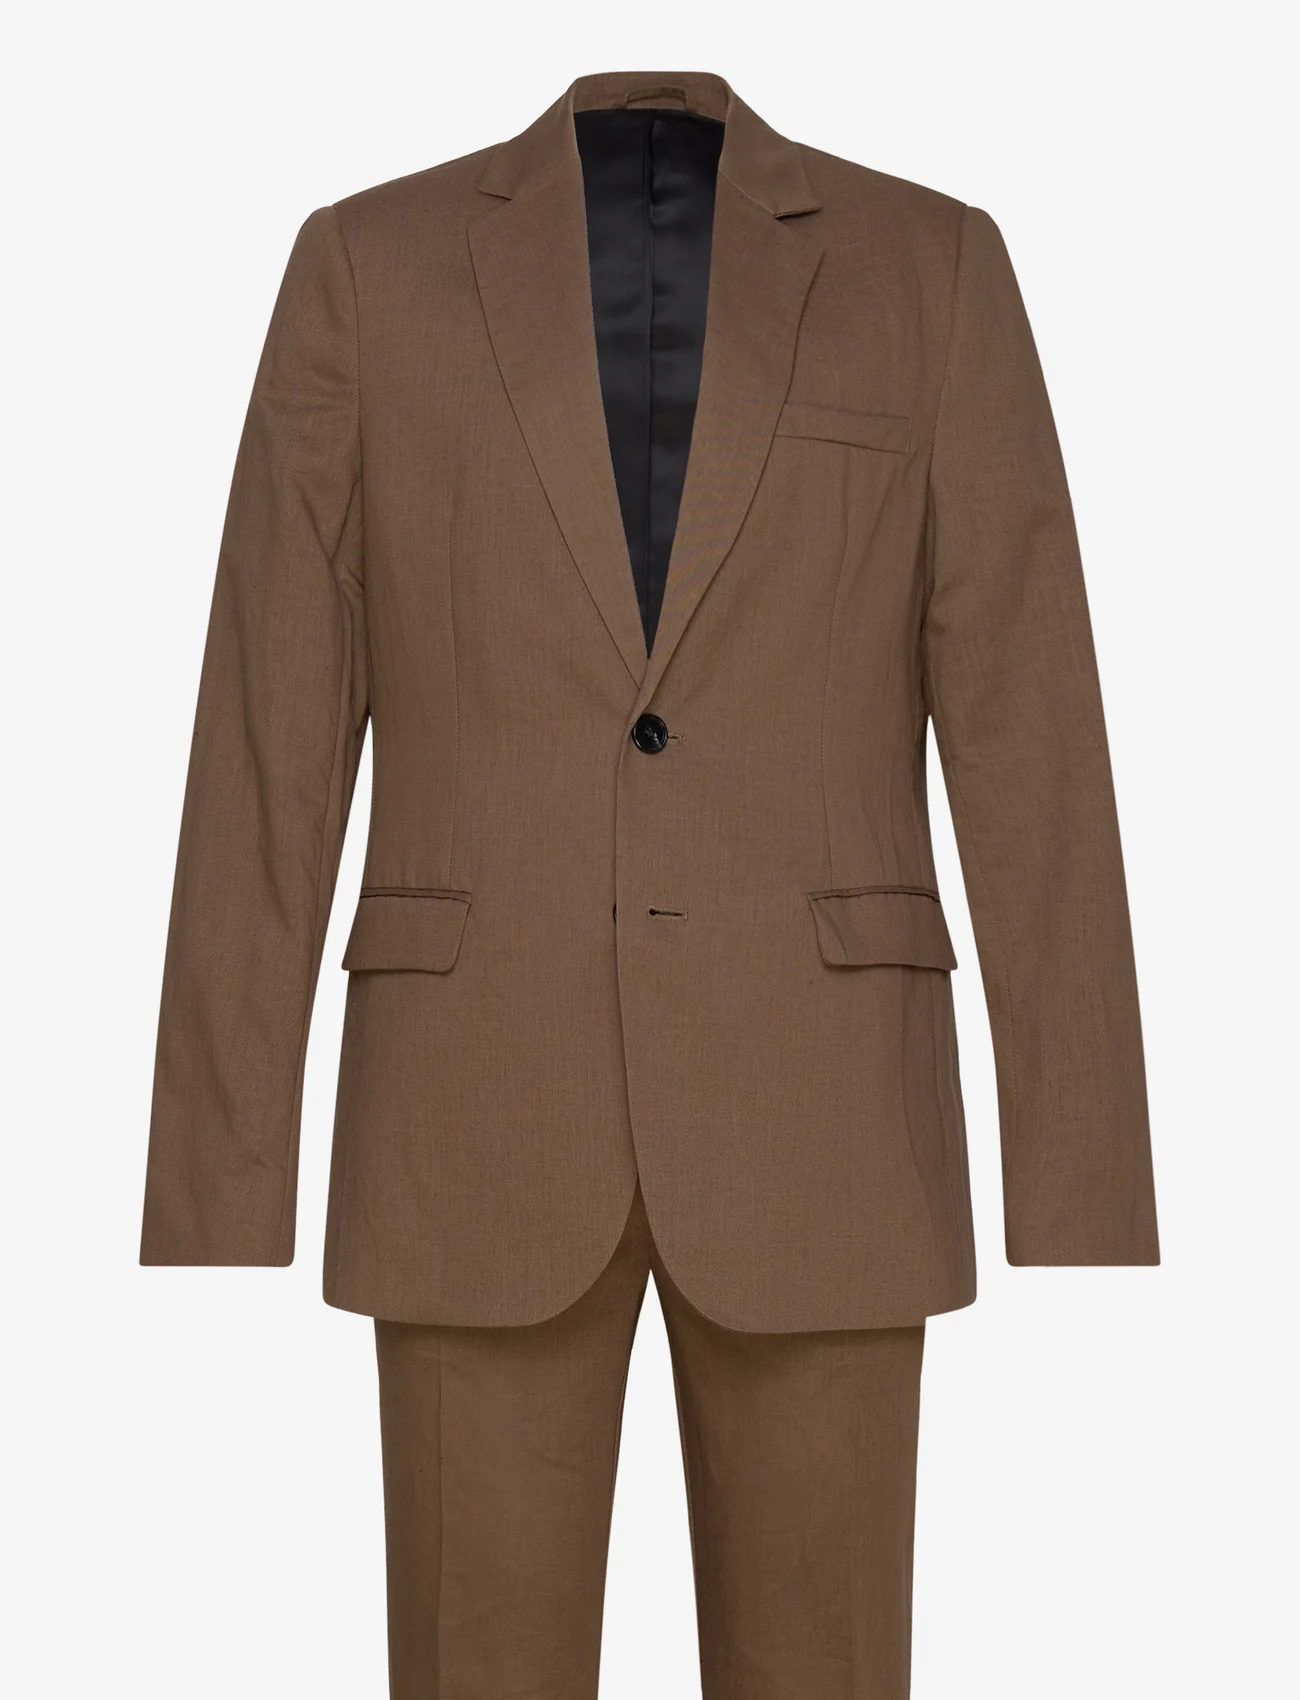 Bruuns Bazaar - LinoBBCarlAxel suit - dubbelknäppta kostymer - toffee - 0